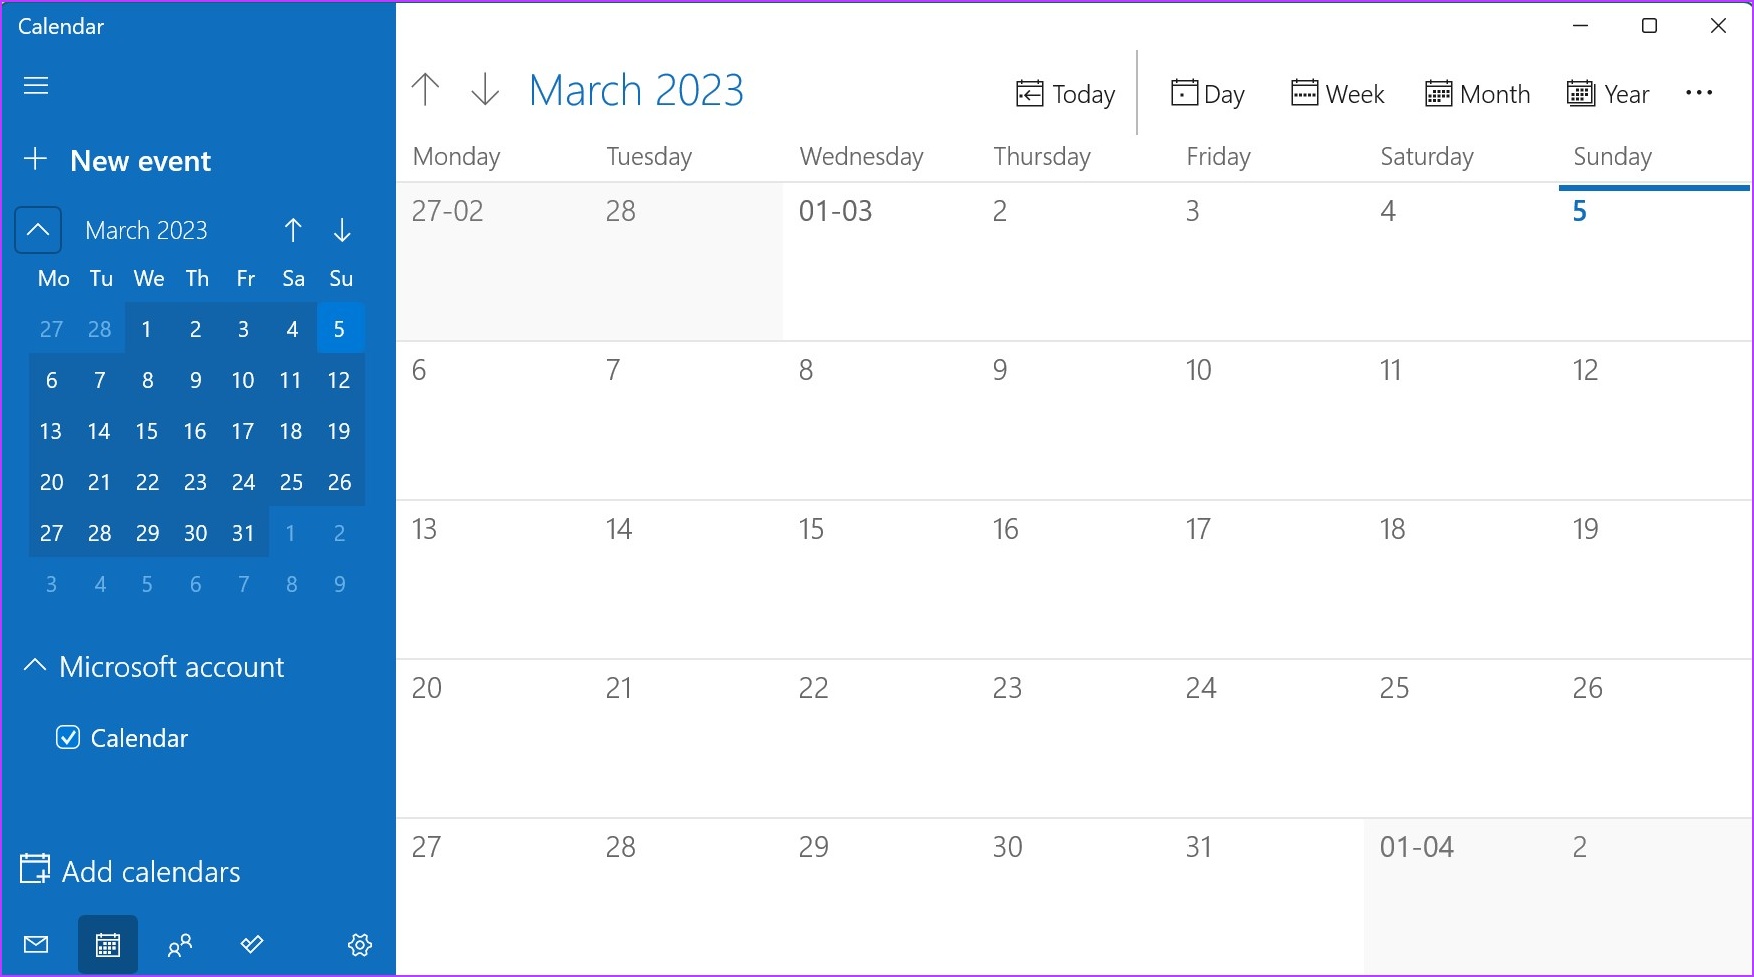 Outlook Calendar - The All-In-One Calendar App